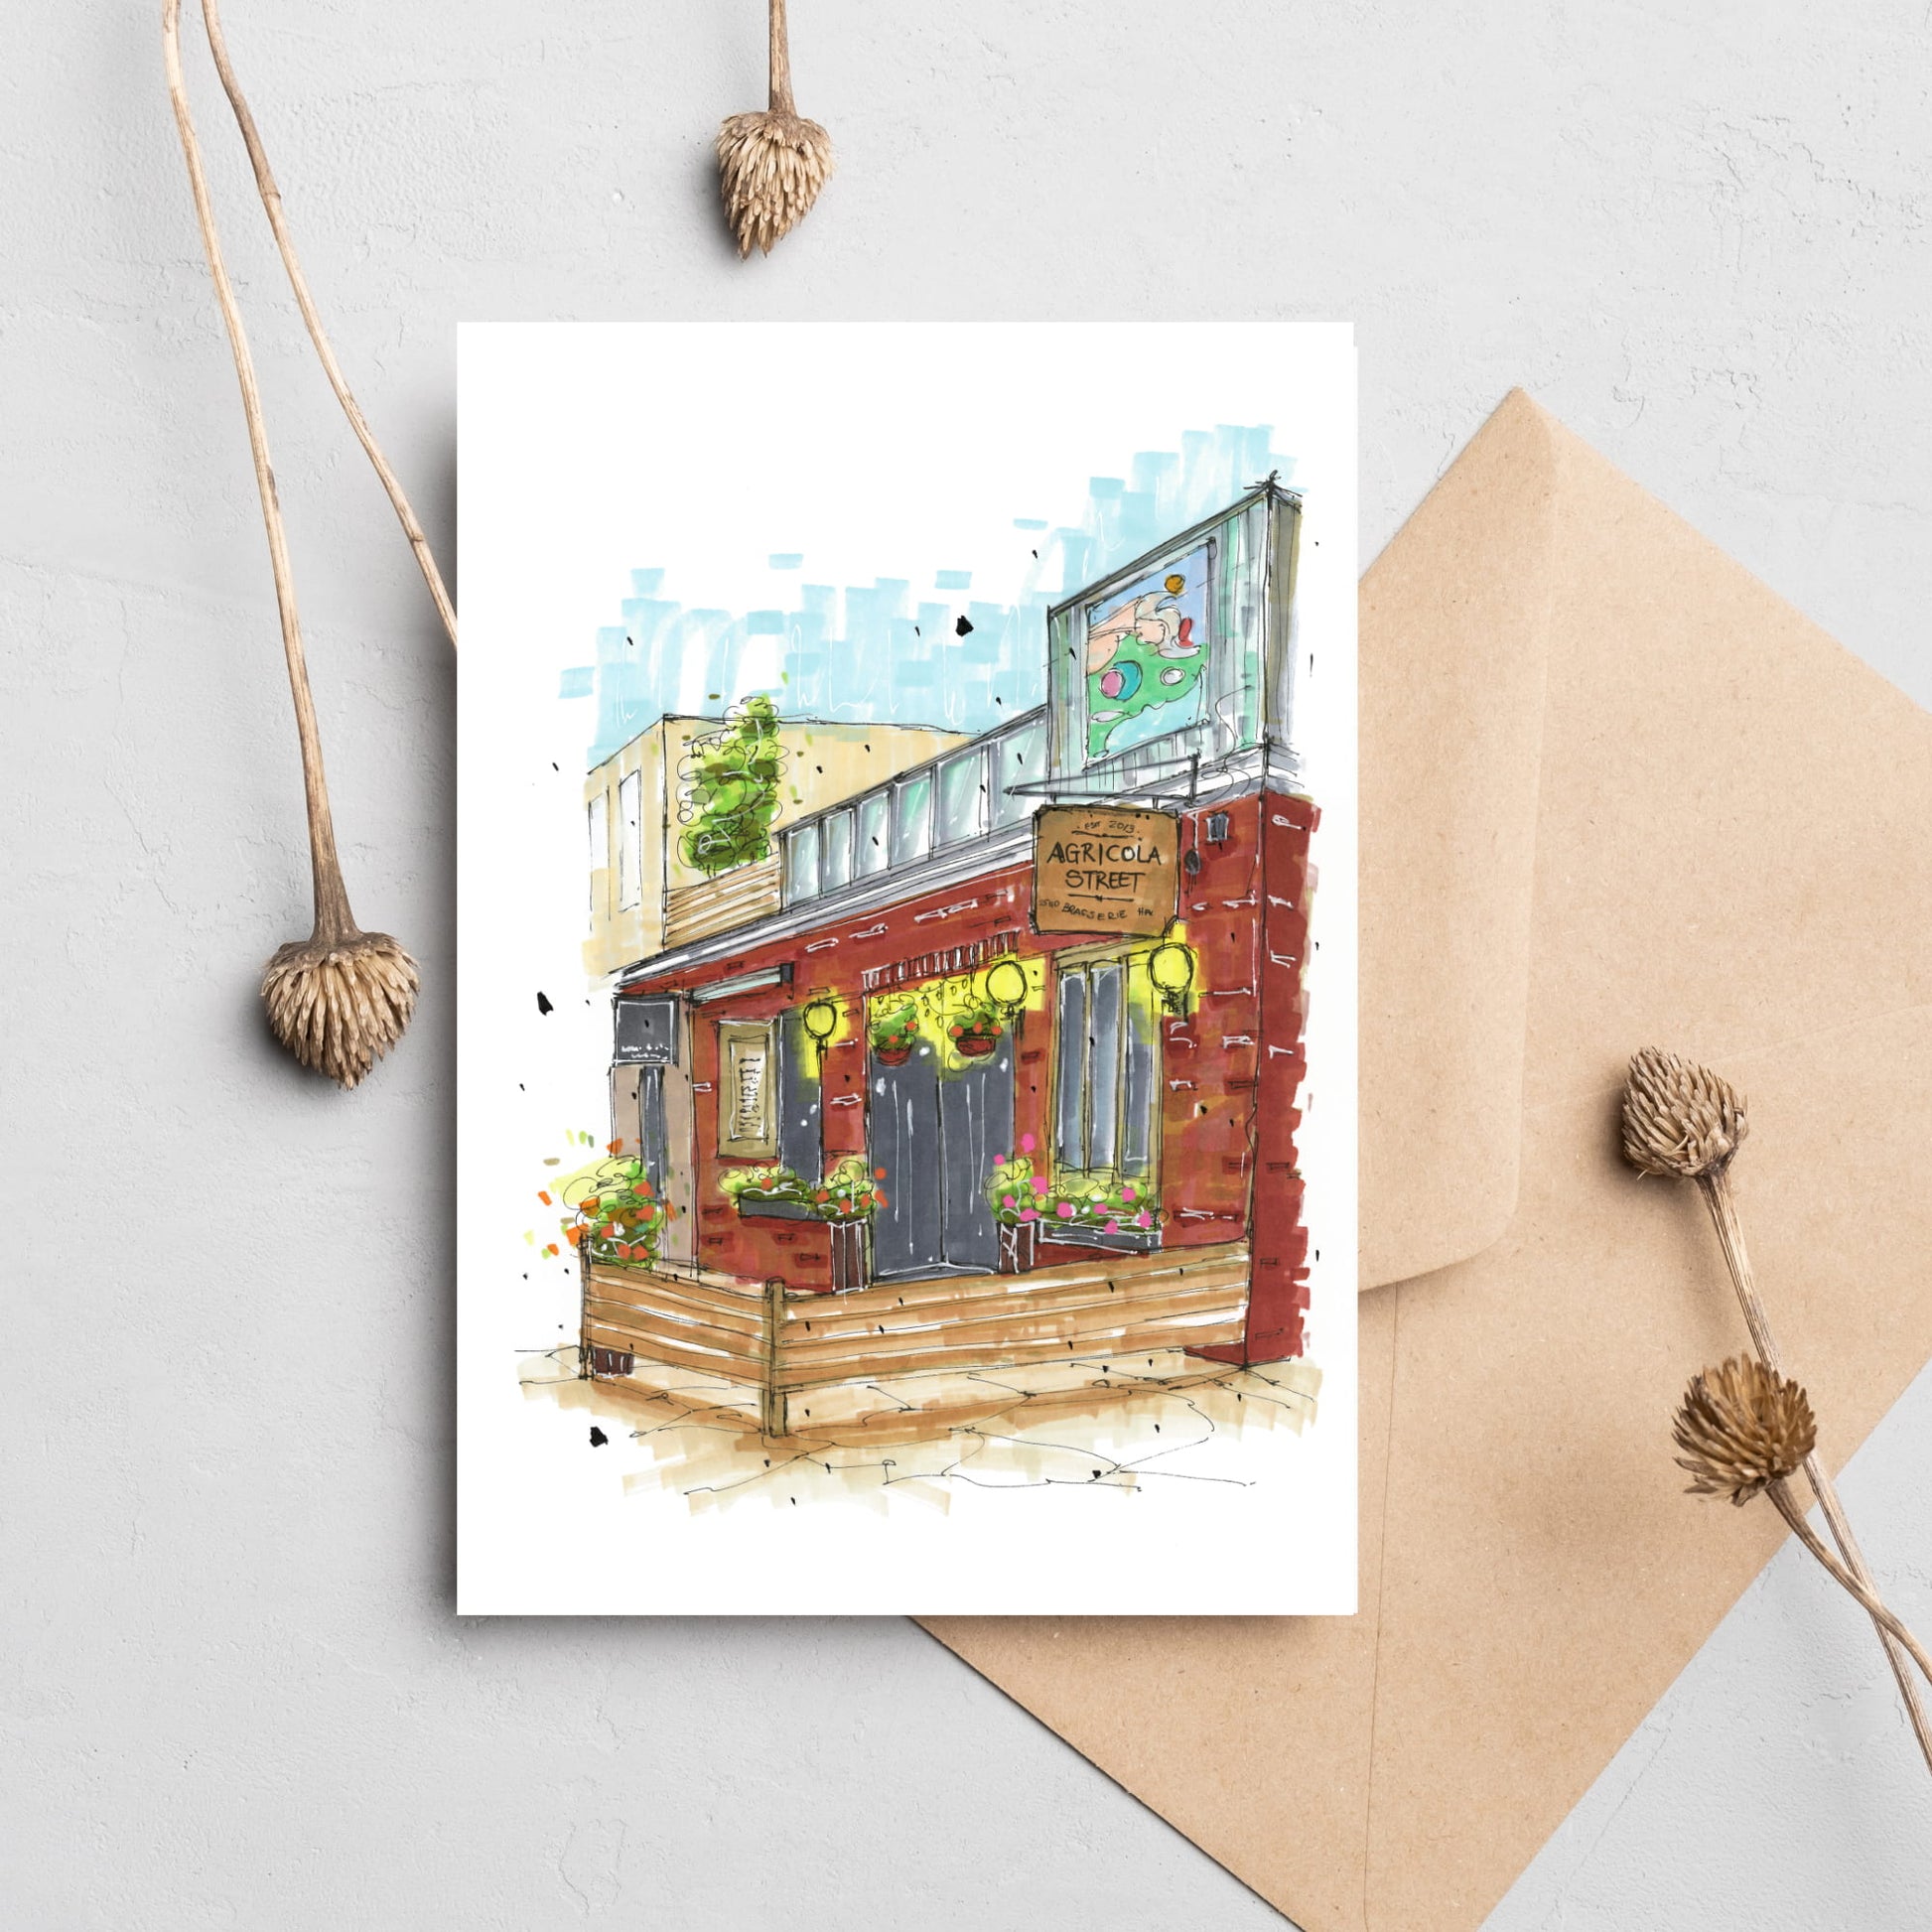 DTS0101 - Agricola Street Brasserie, Halifax, Nova Scotia, Urban Sketch, Greeting Card with Envelope, Downtown Sketcher, Wynand van Niekerk